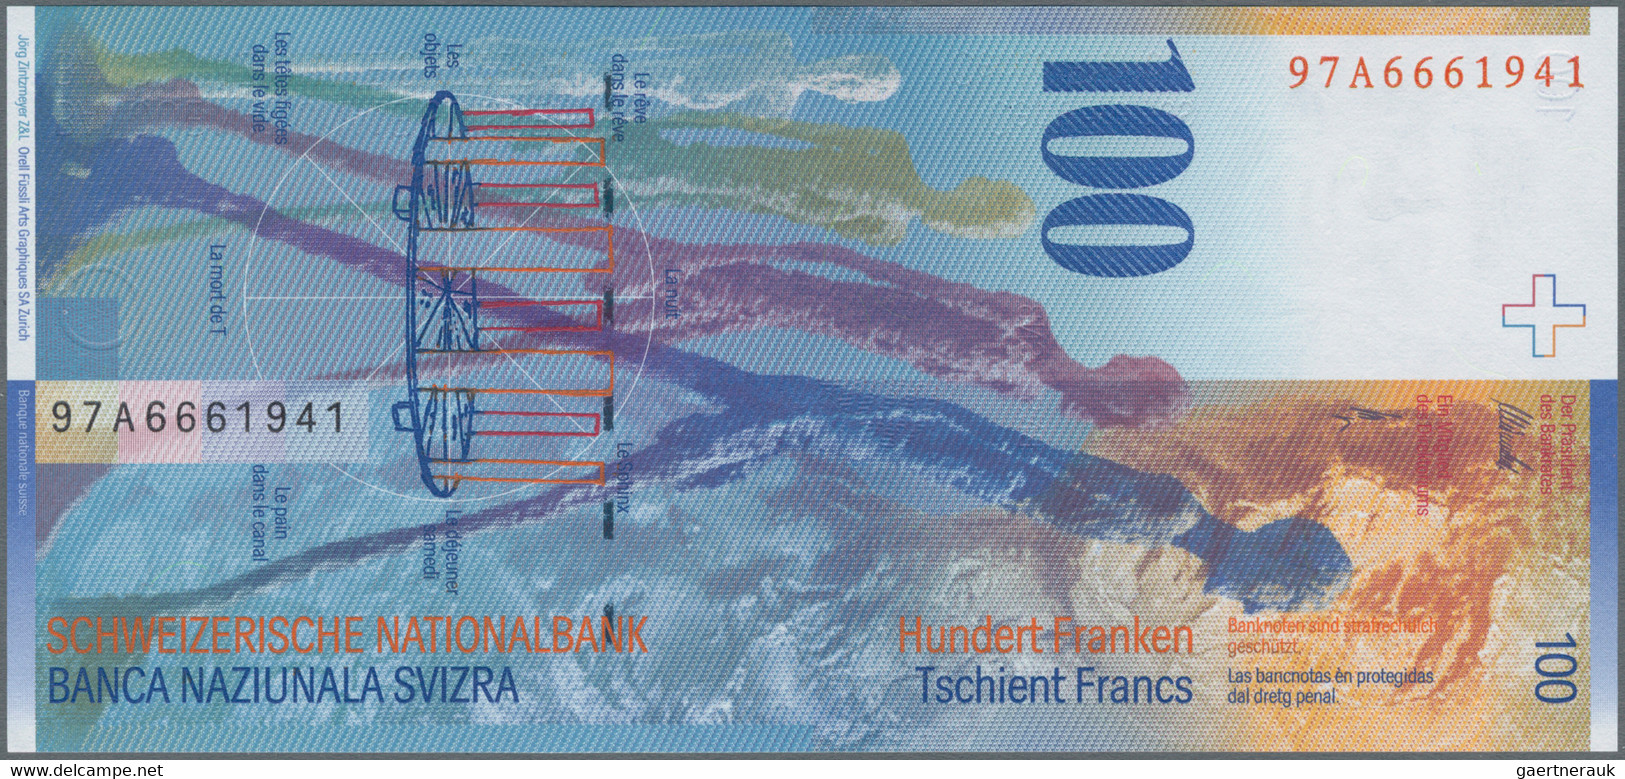 Switzerland / Schweiz: Very nice set with 9 banknotes, comprising 3x 10, 2x 20, 2x 50, 100 and 200 F